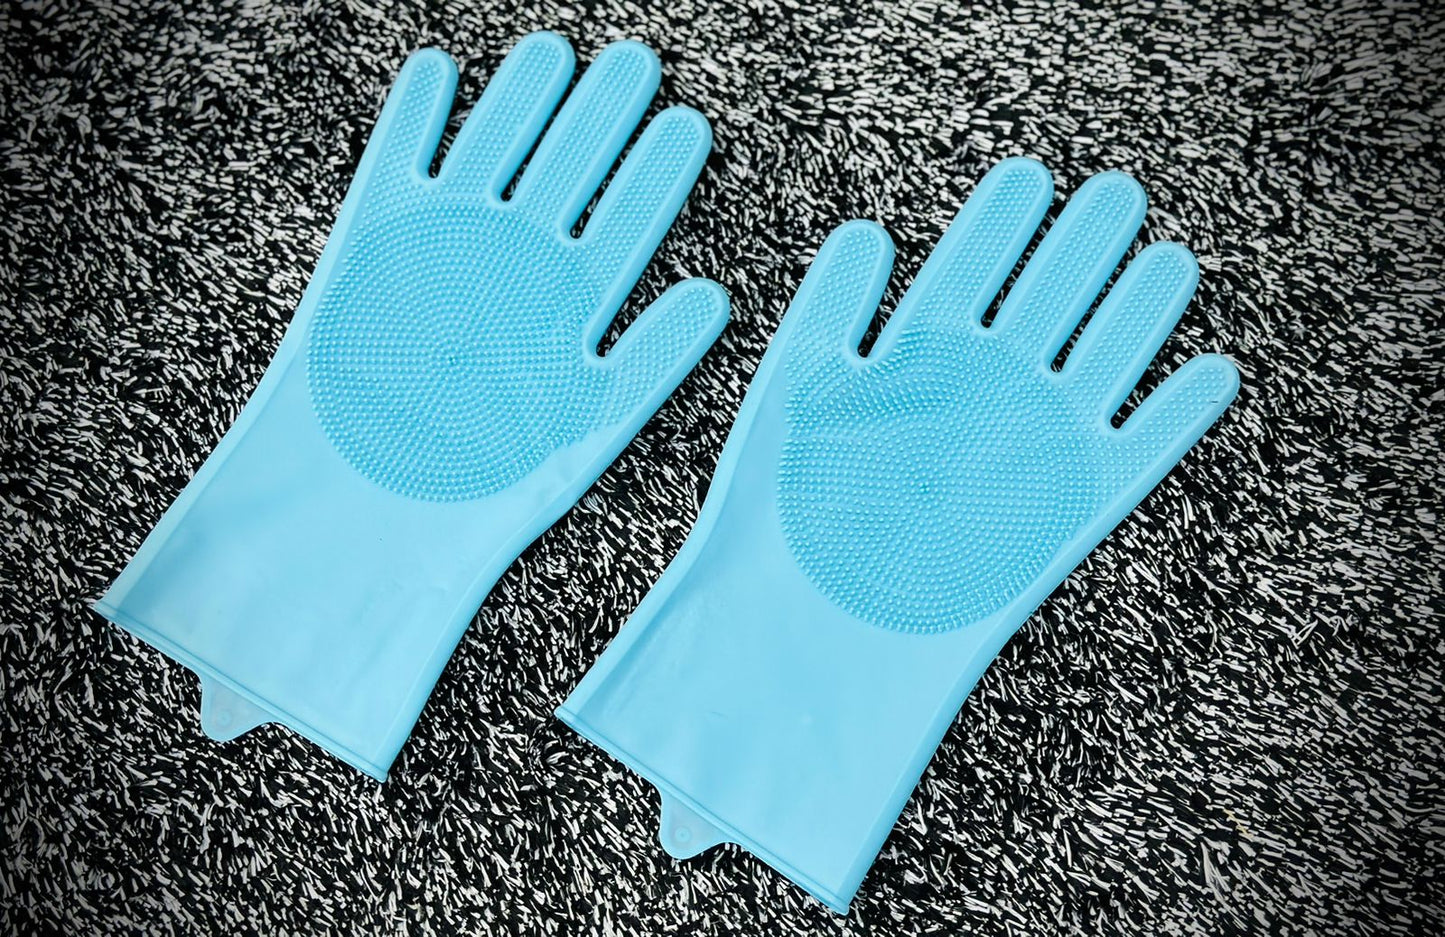 Silicon Washing Gloves | Dishwashing Gloves